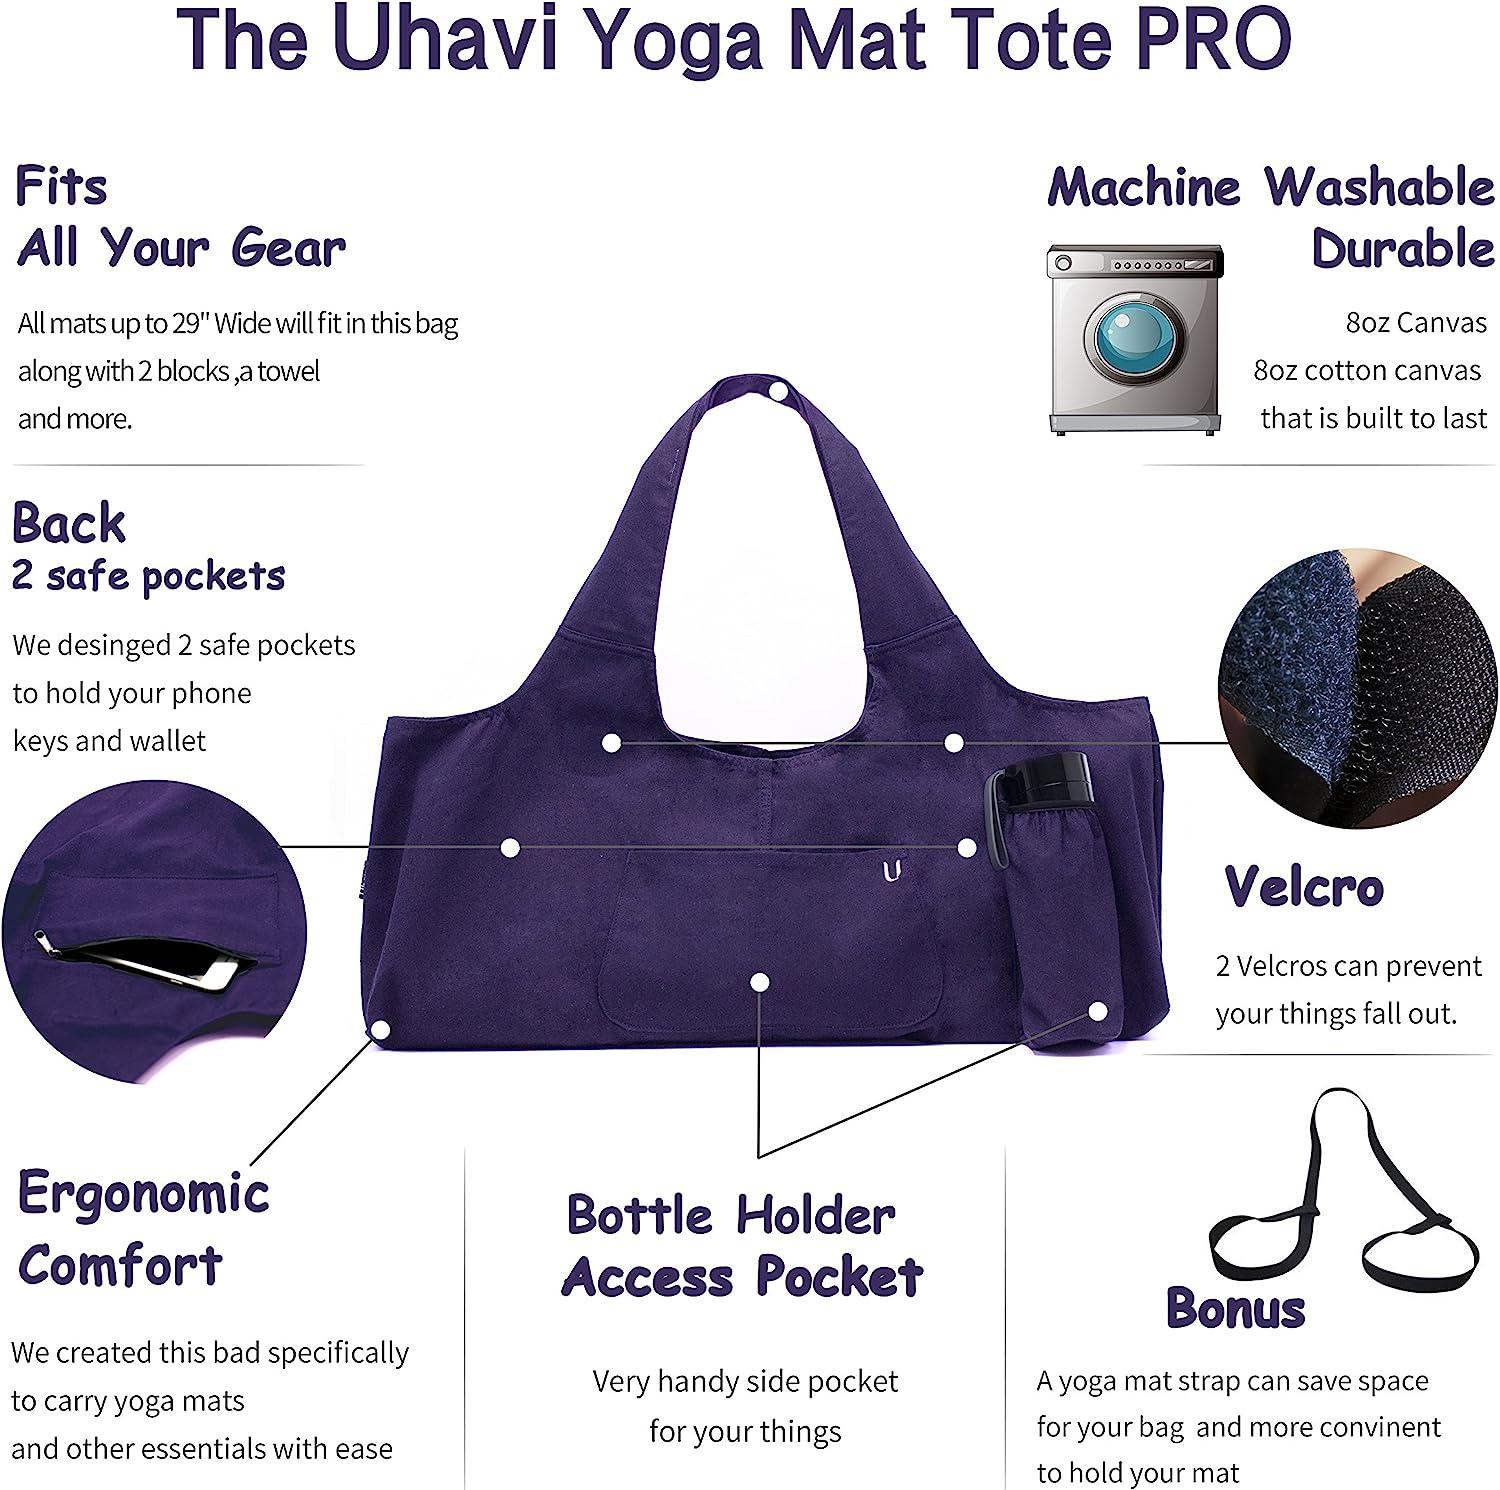 Yoga Mat Bag | Light Weight | Pockets to Carry Yoga Blocks, Large Mat & More